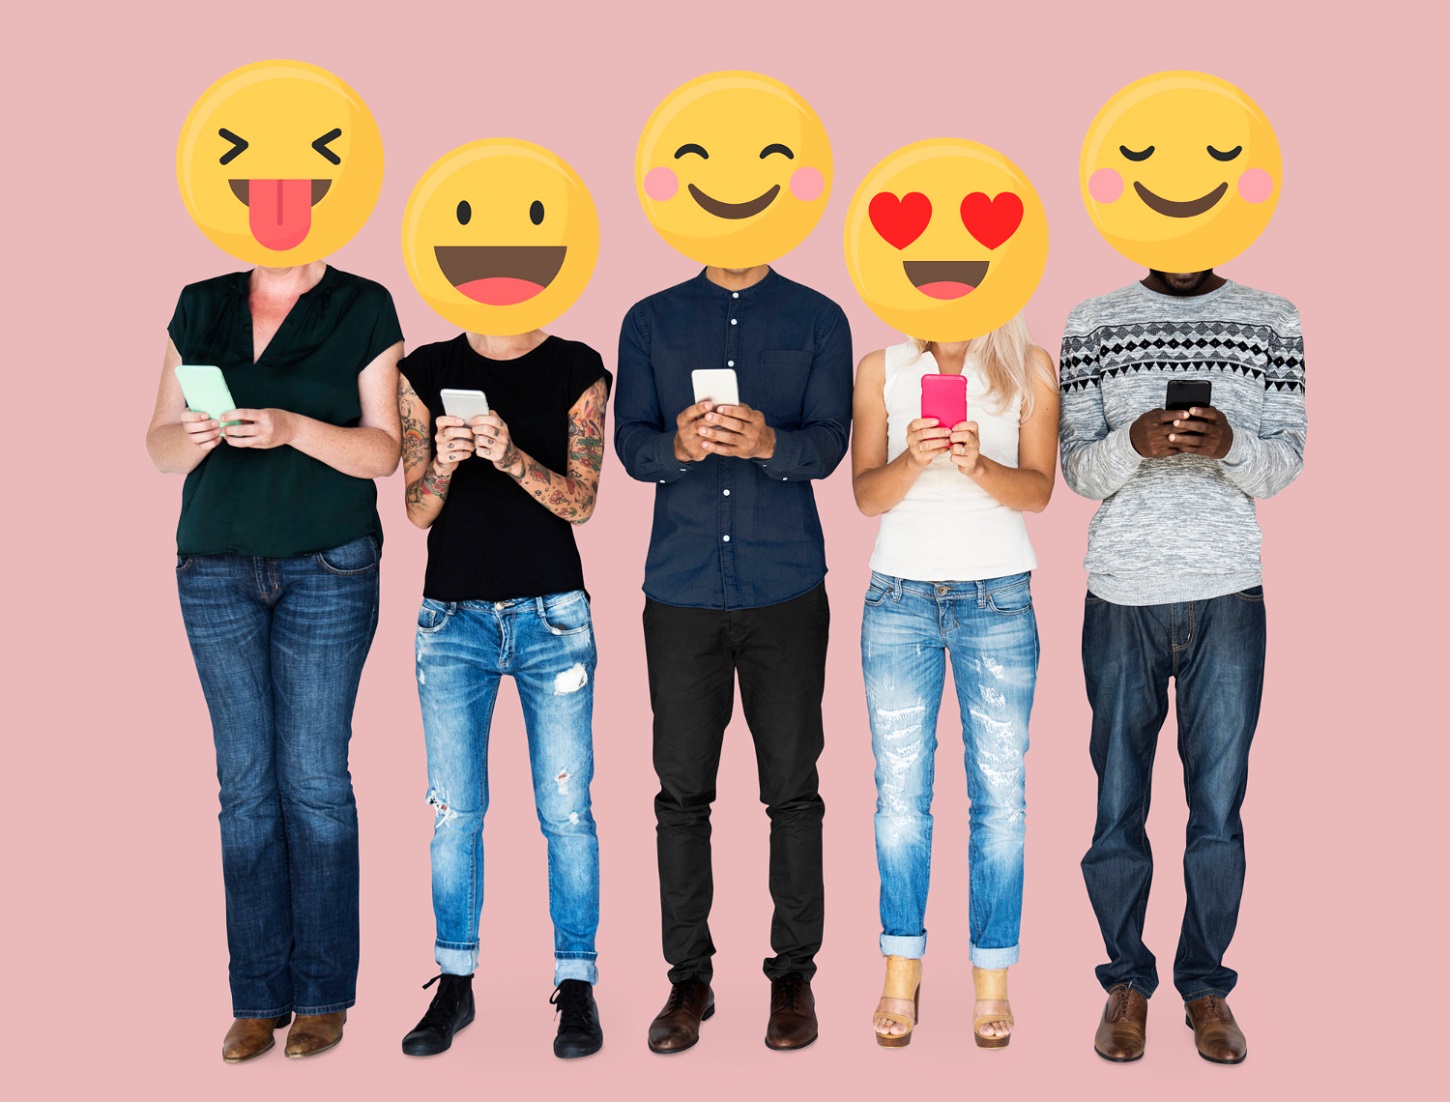 emoji-faces-social-media_rawpixel.jpg